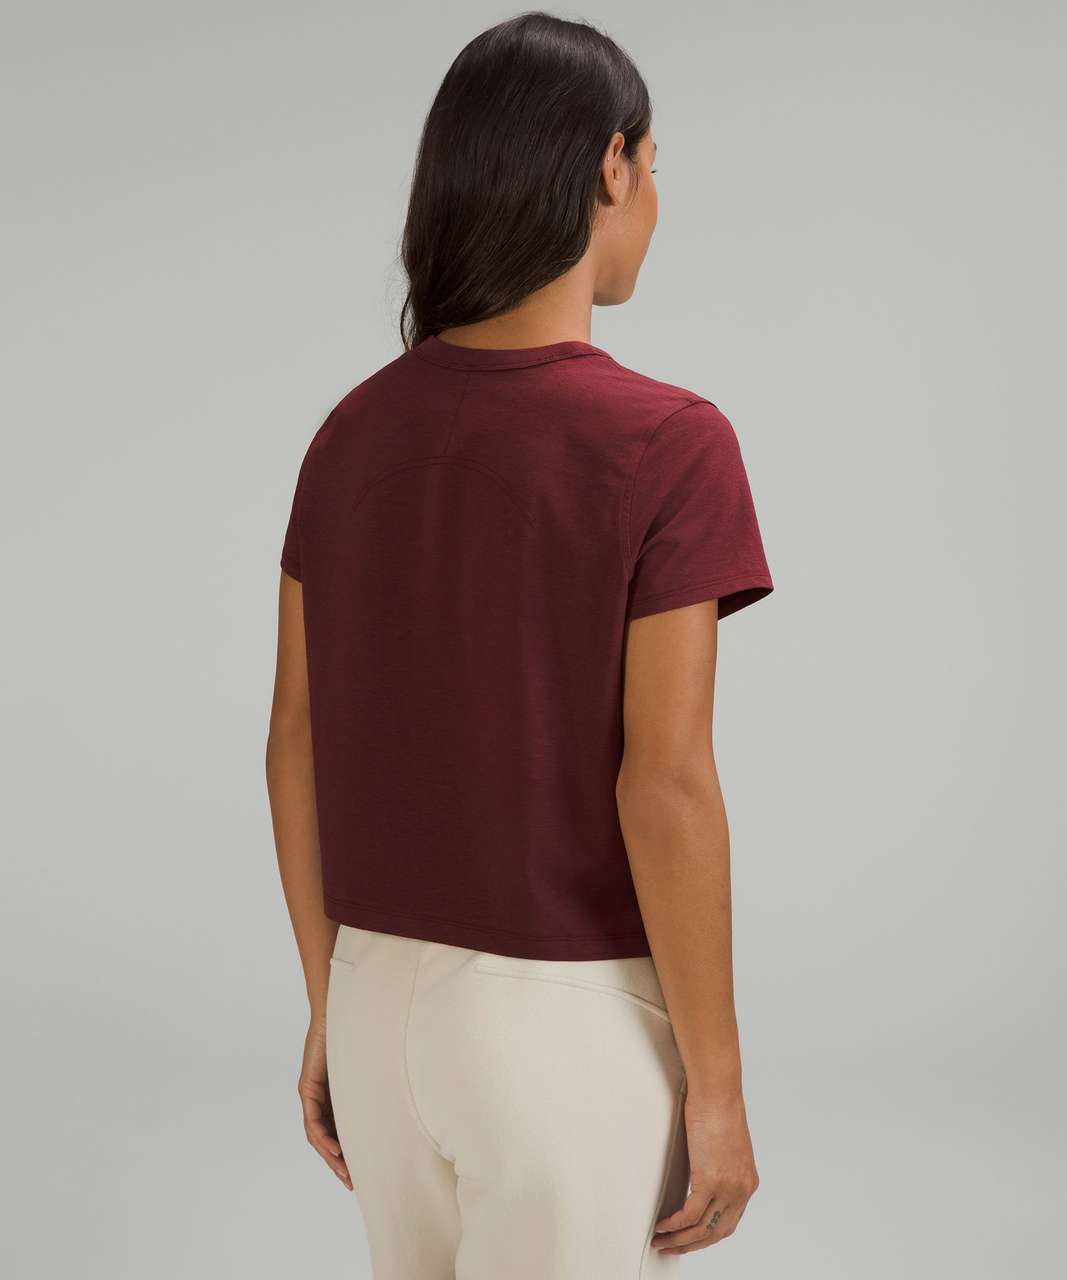 Lululemon Classic-Fit Cotton-Blend T-Shirt - Red Merlot